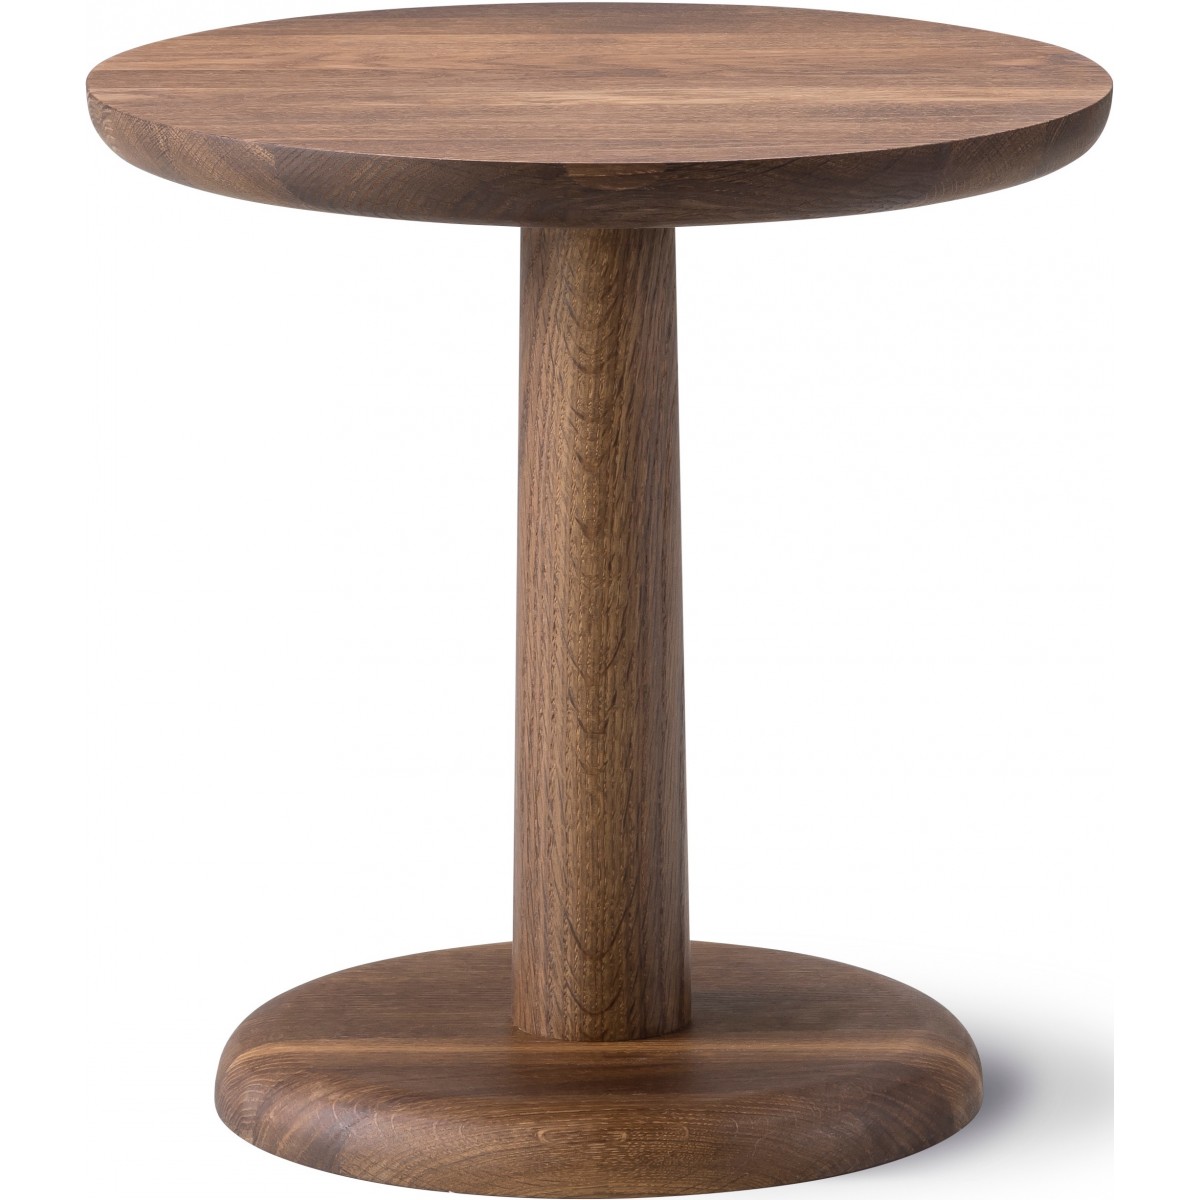 Smoked oiled oak – Ø40 x H41 cm – Pon table 1285